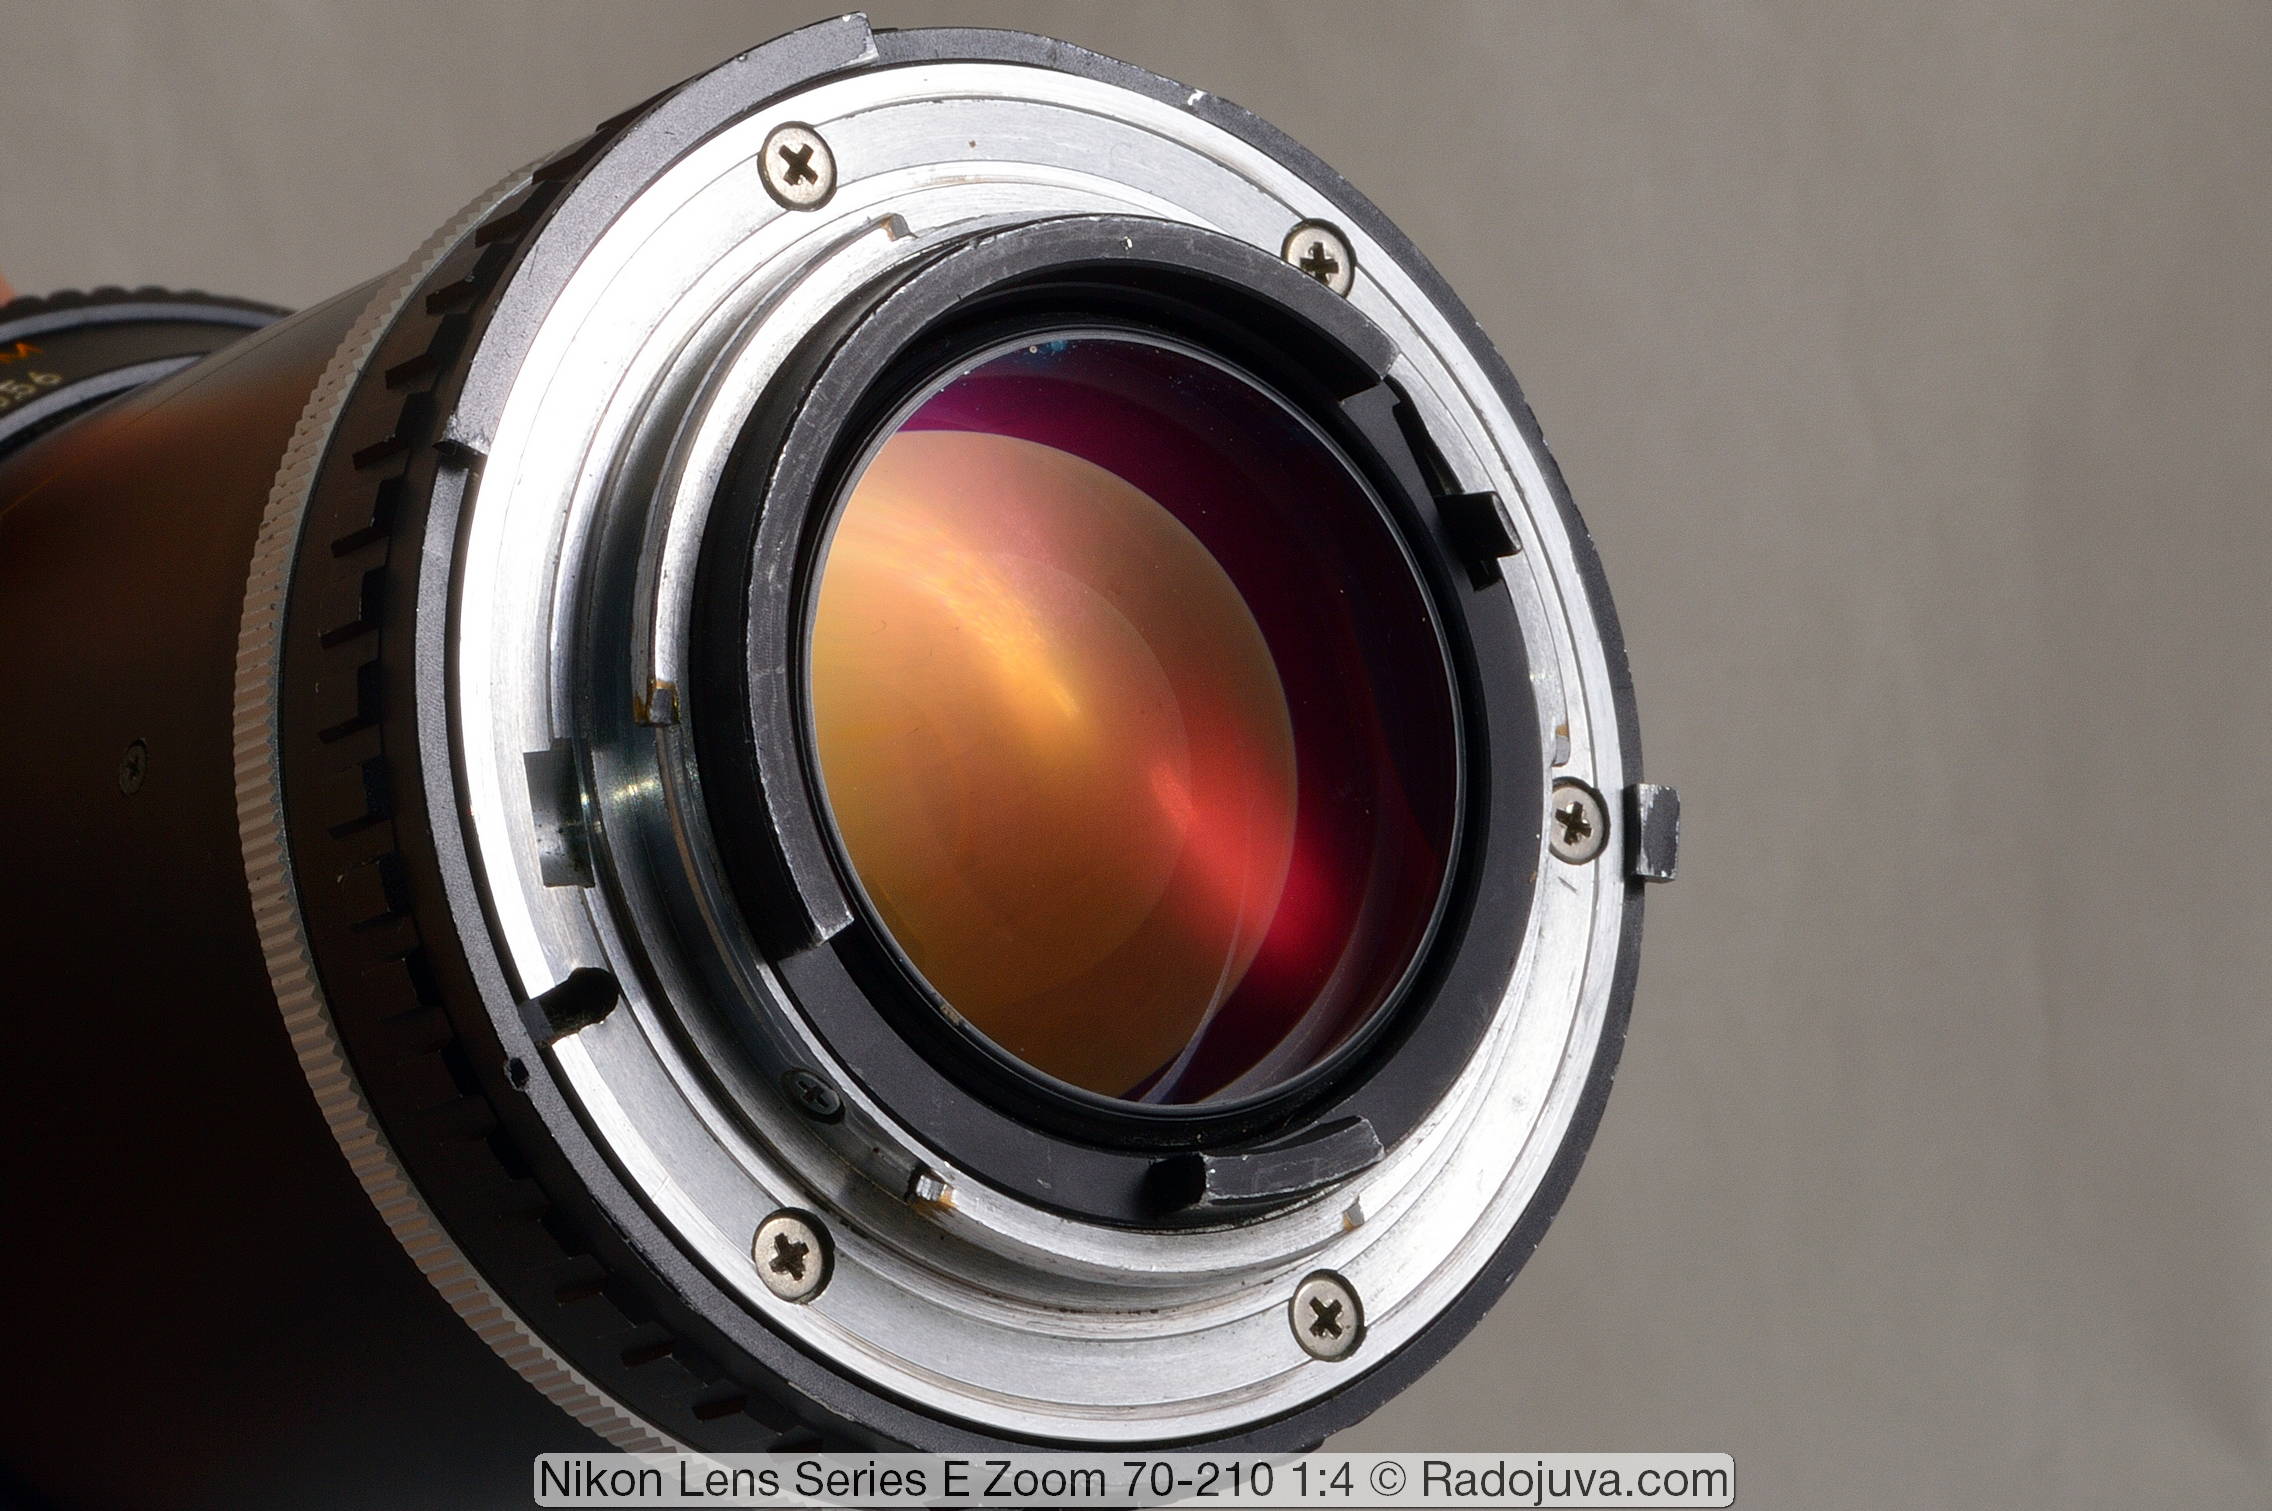 Nikon Lens Series E Zoom 70-210mm 1:4